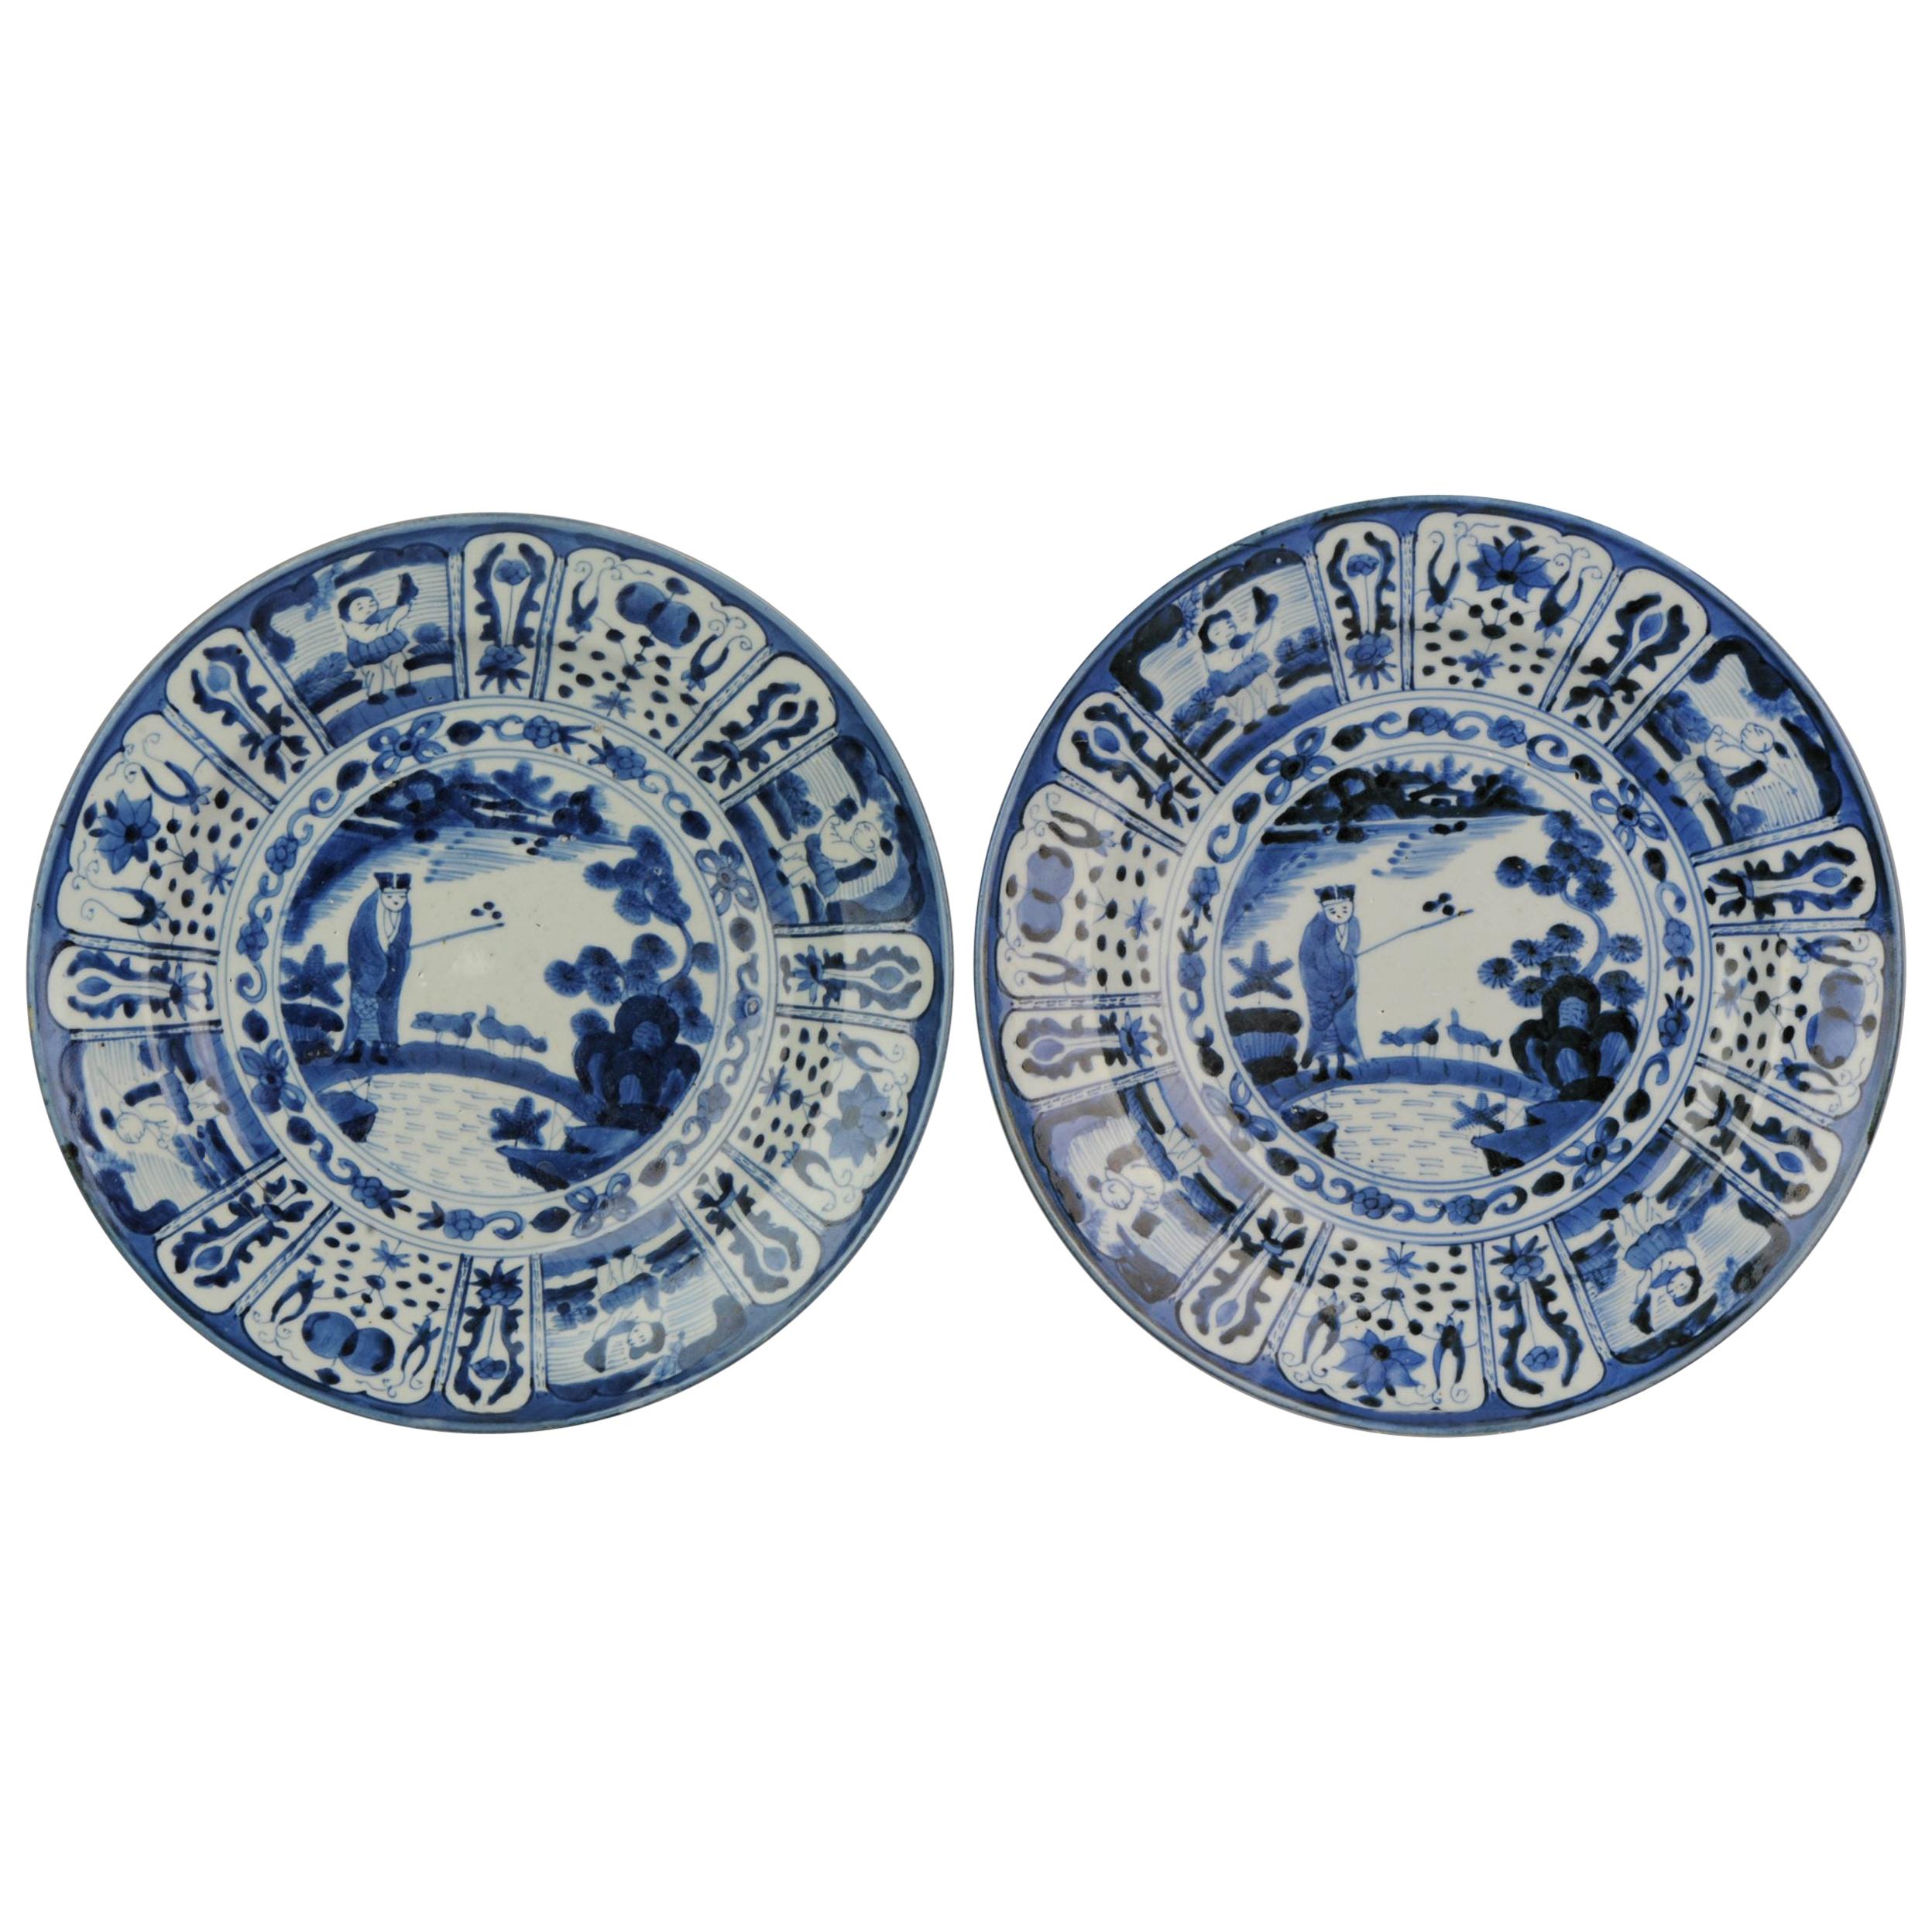 17th-18th Century Japanese Porcelain Plate Kraak Arita Deer Symbols Antique